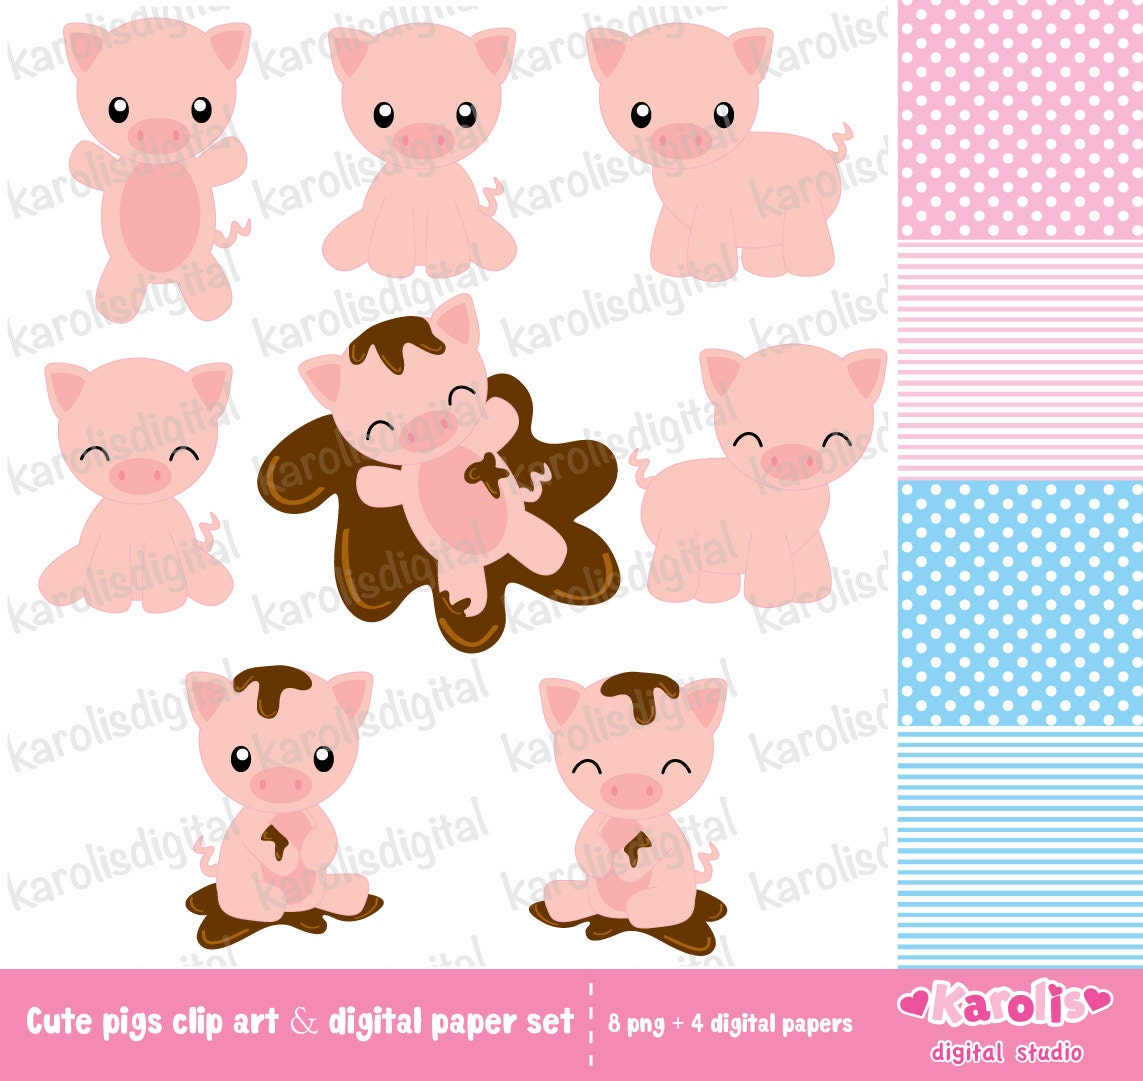 Cute pigs clip art & digital paper set | Etsy